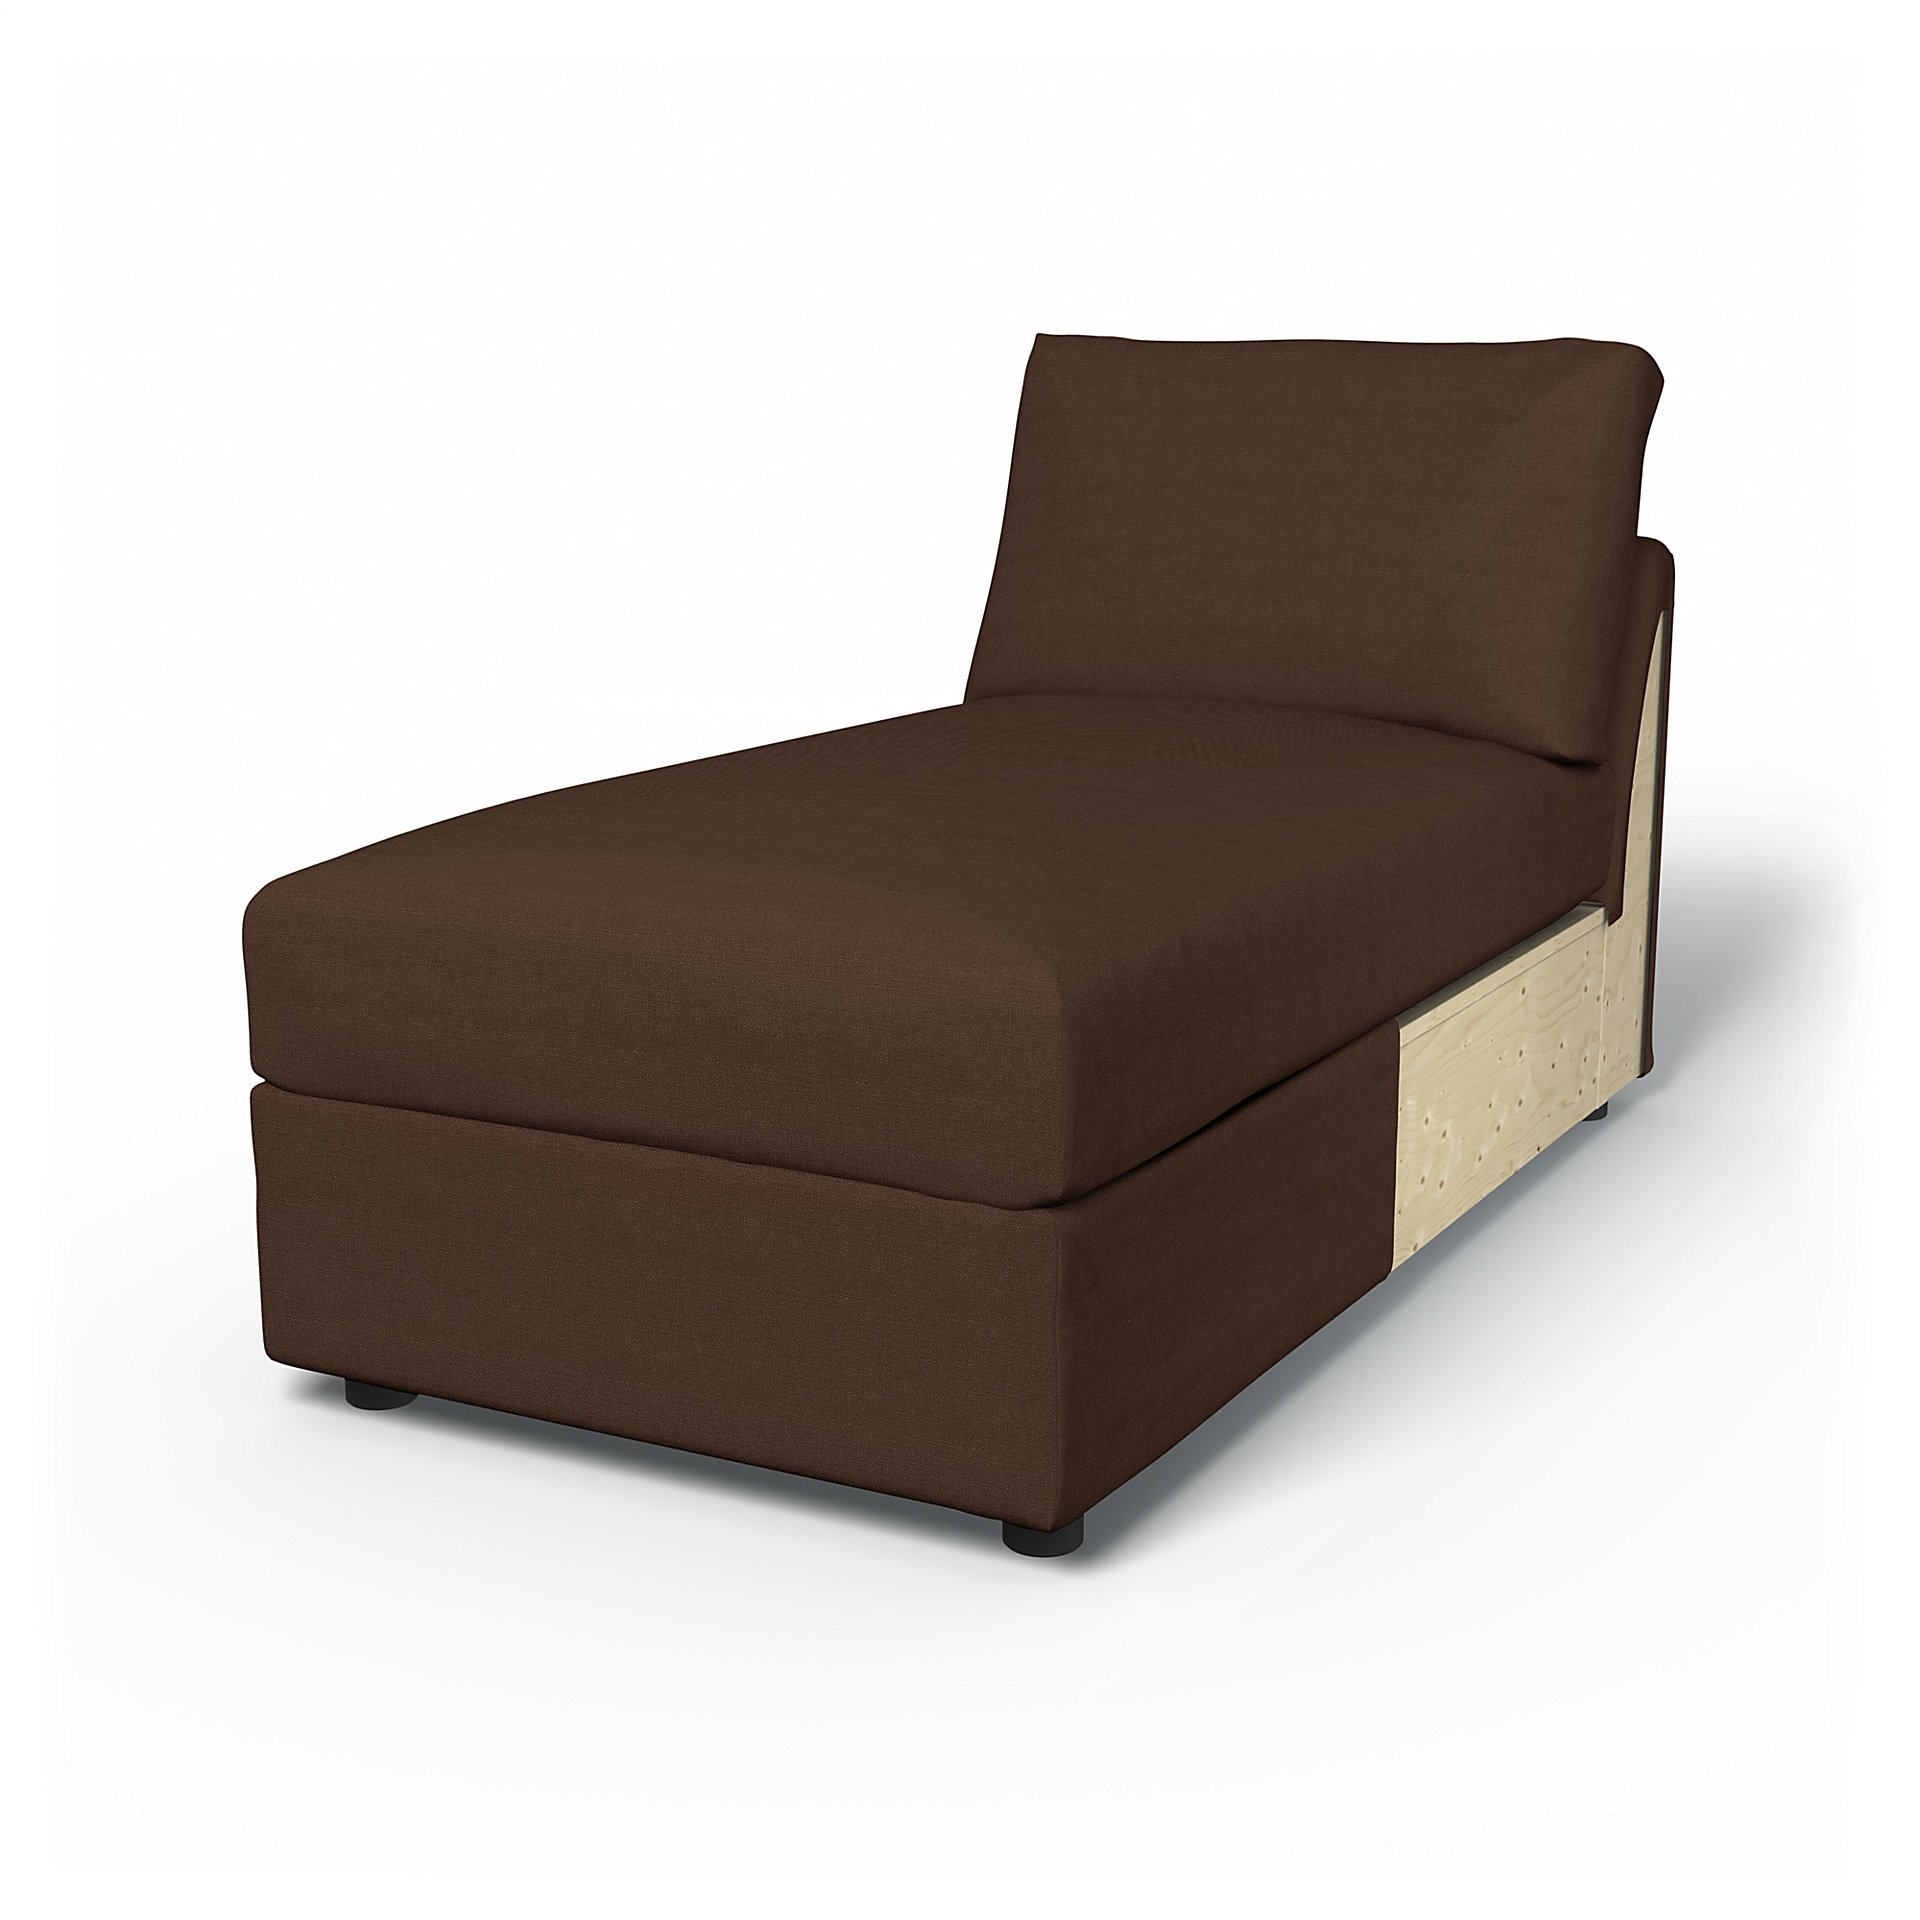 IKEA - Vimle Chaise Longue Cover, Chocolate, Linen - Bemz